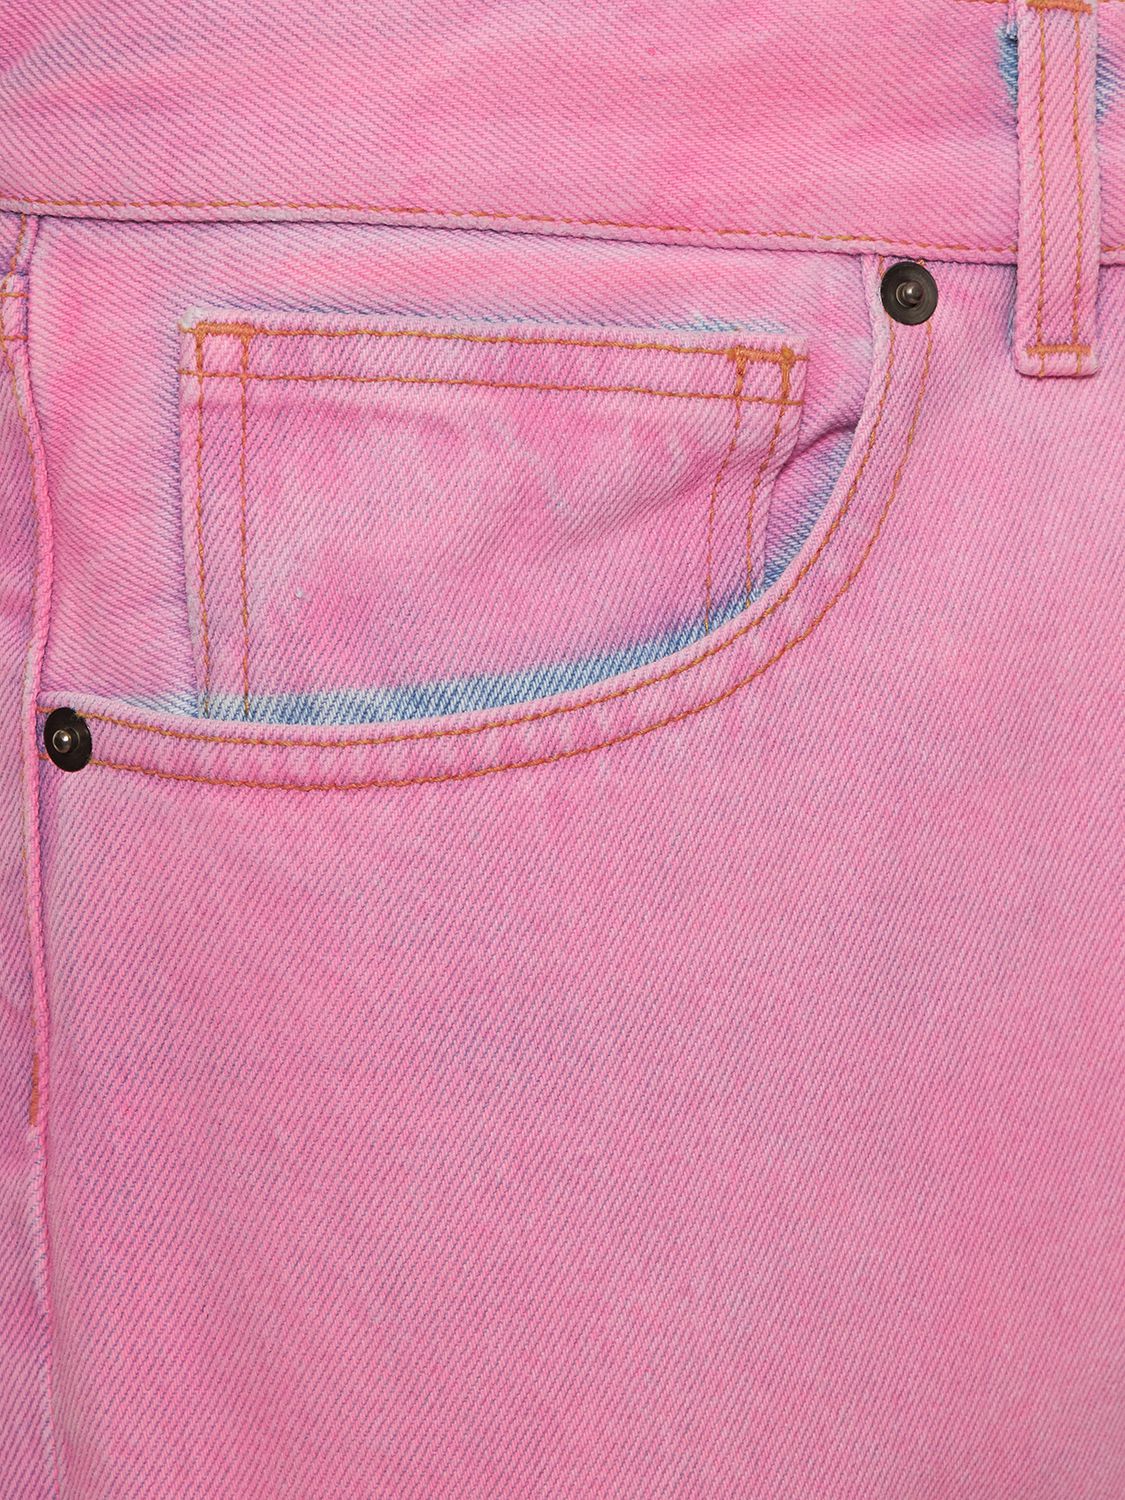 21cm larry neon cotton denim jeans - Darkpark - Men